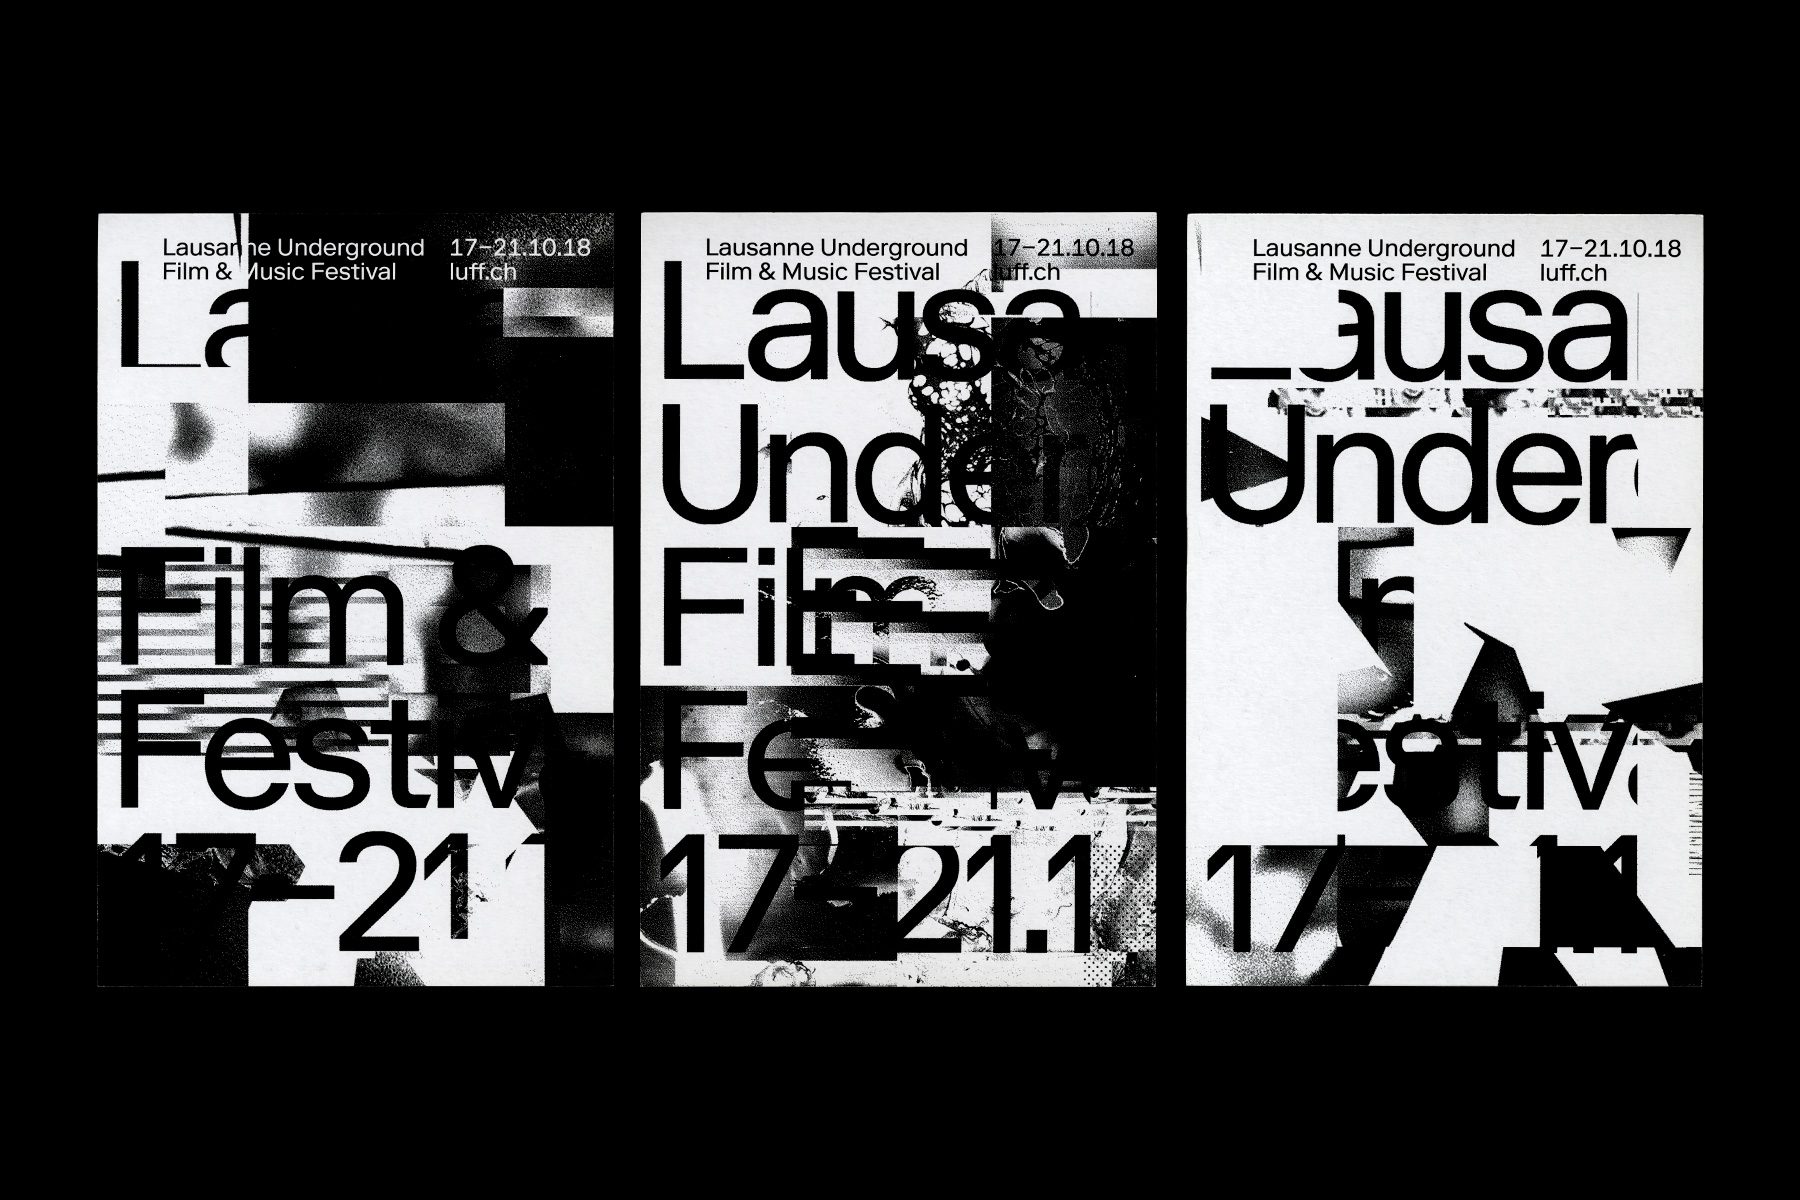 LUFF_Lausanne-Underground-Film-and-Music-Festival_2018_Dimitri-Jeannottat_1800x1200_16